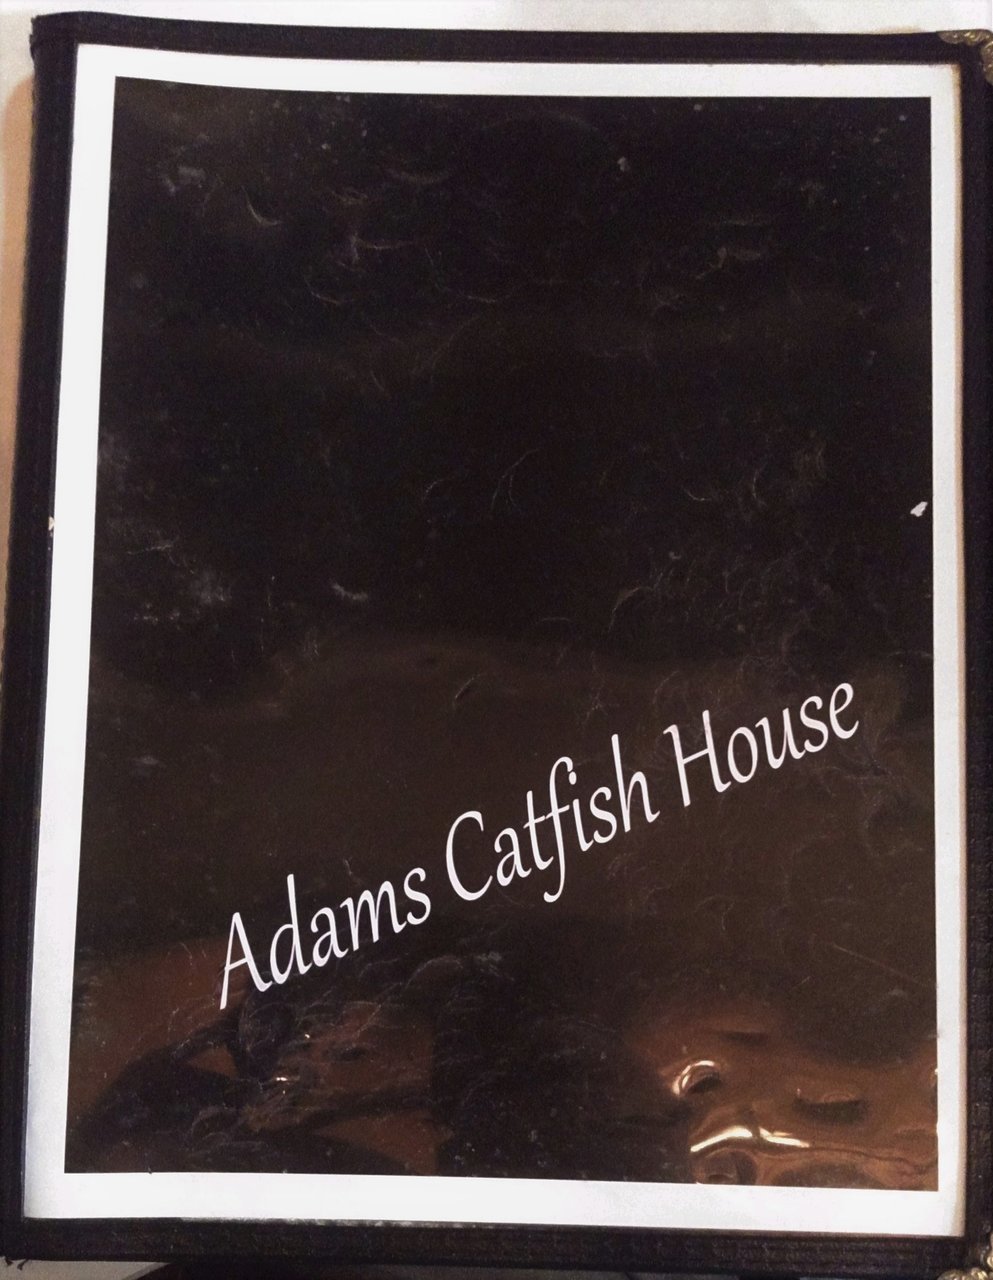 Adams Catfish House